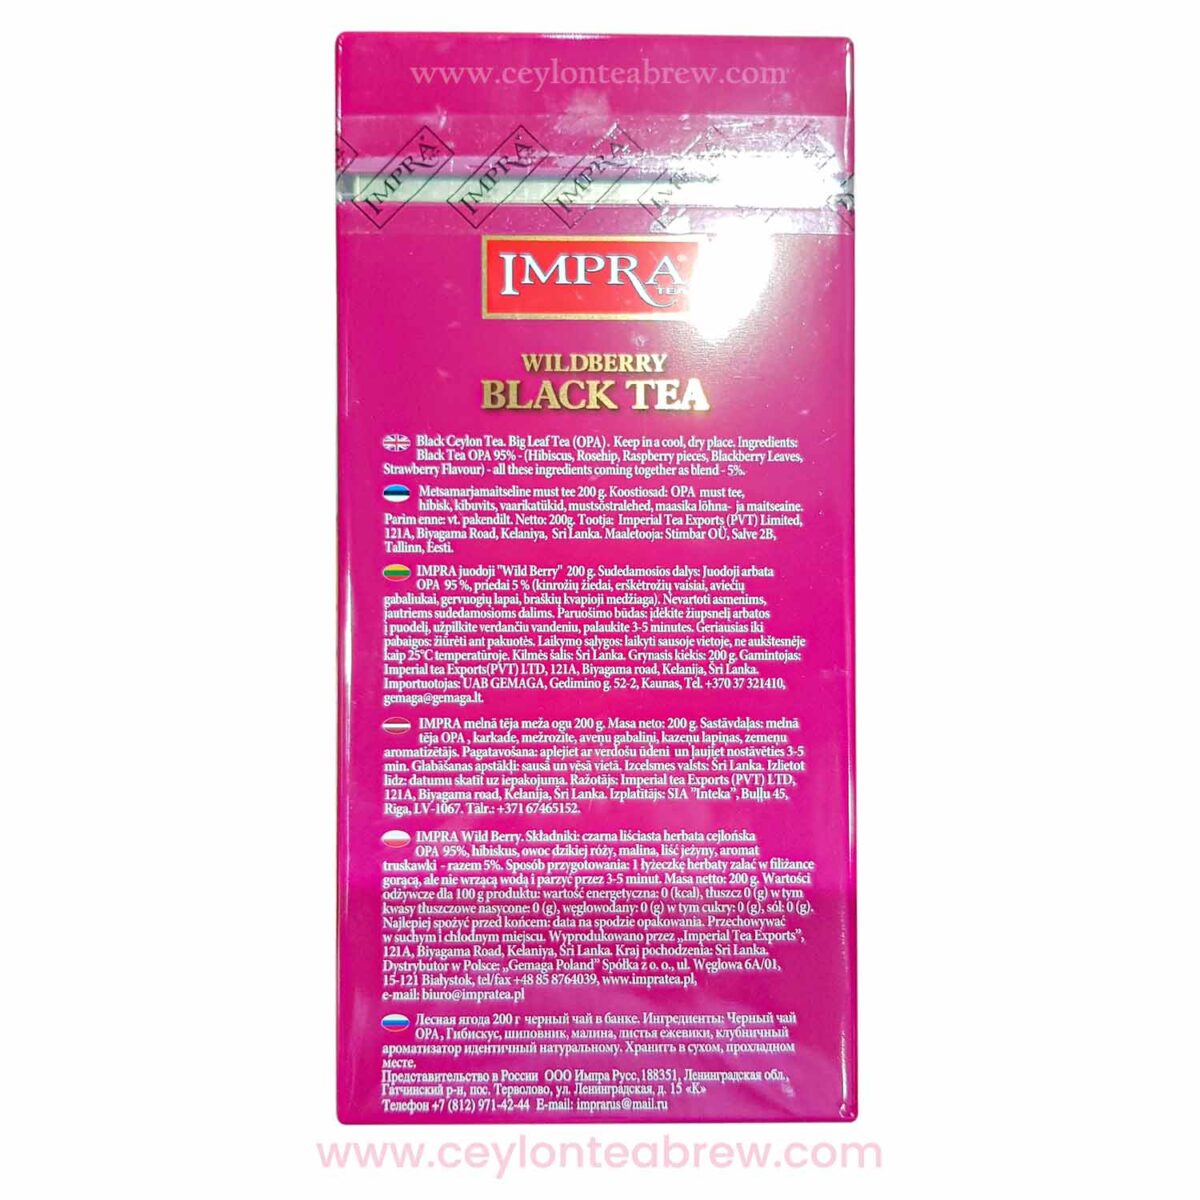 Impra Black large leaf tea with wildberry flavor